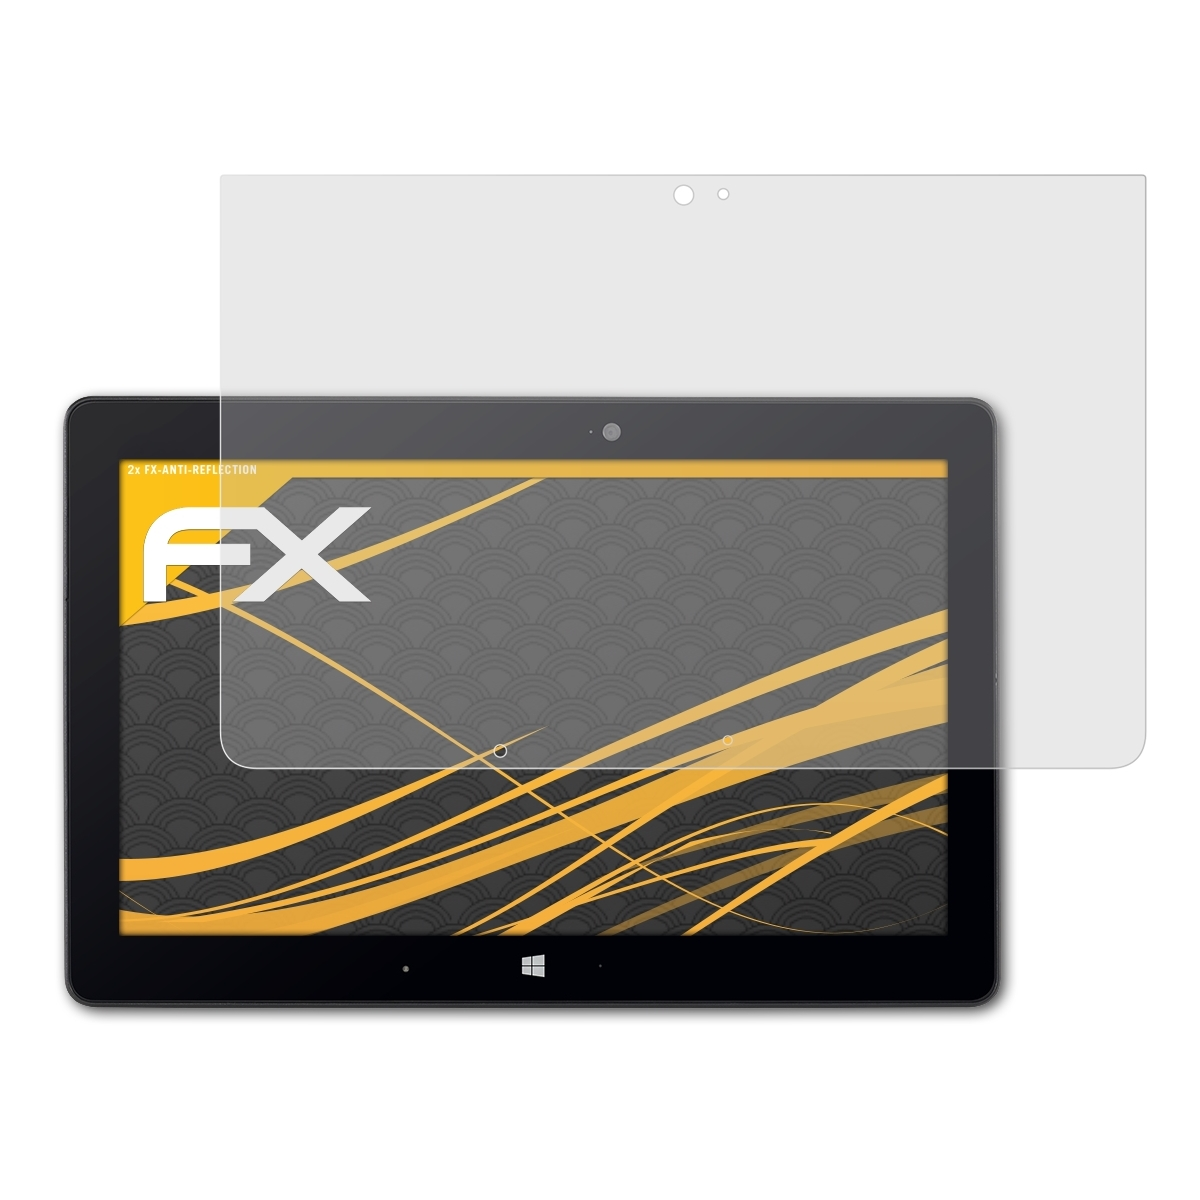 ATFOLIX 2x Fujitsu Q775) FX-Antireflex Stylistic Displayschutz(für